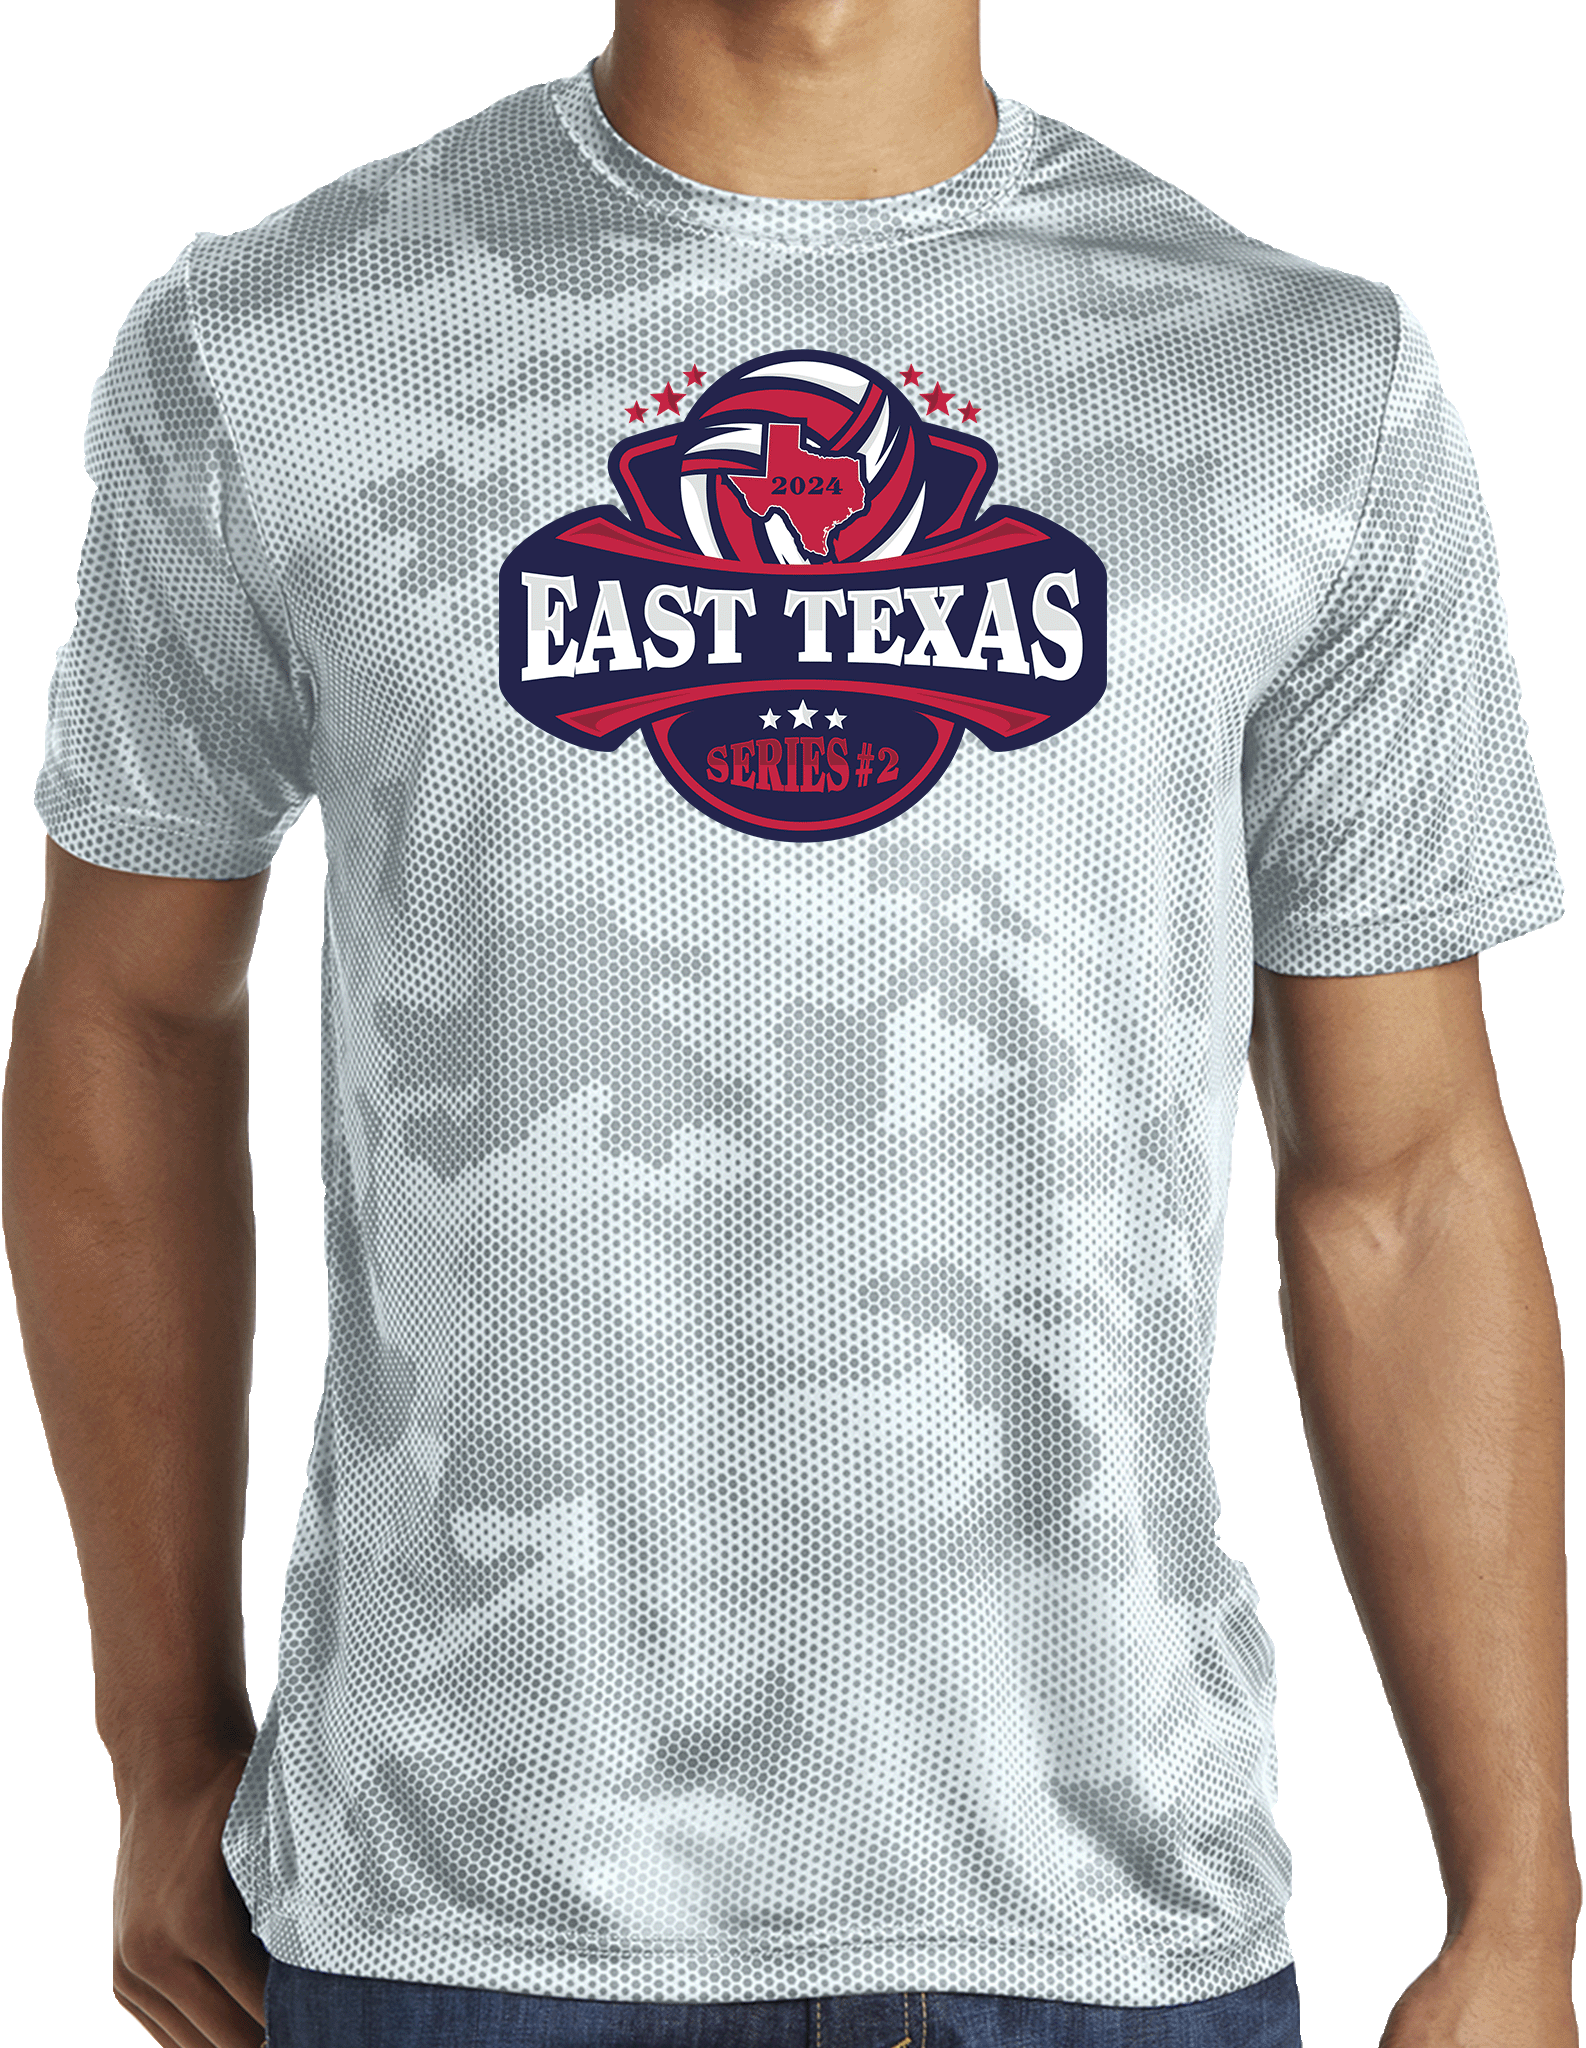 Performance Shirts - 2024 East Texas Series #2